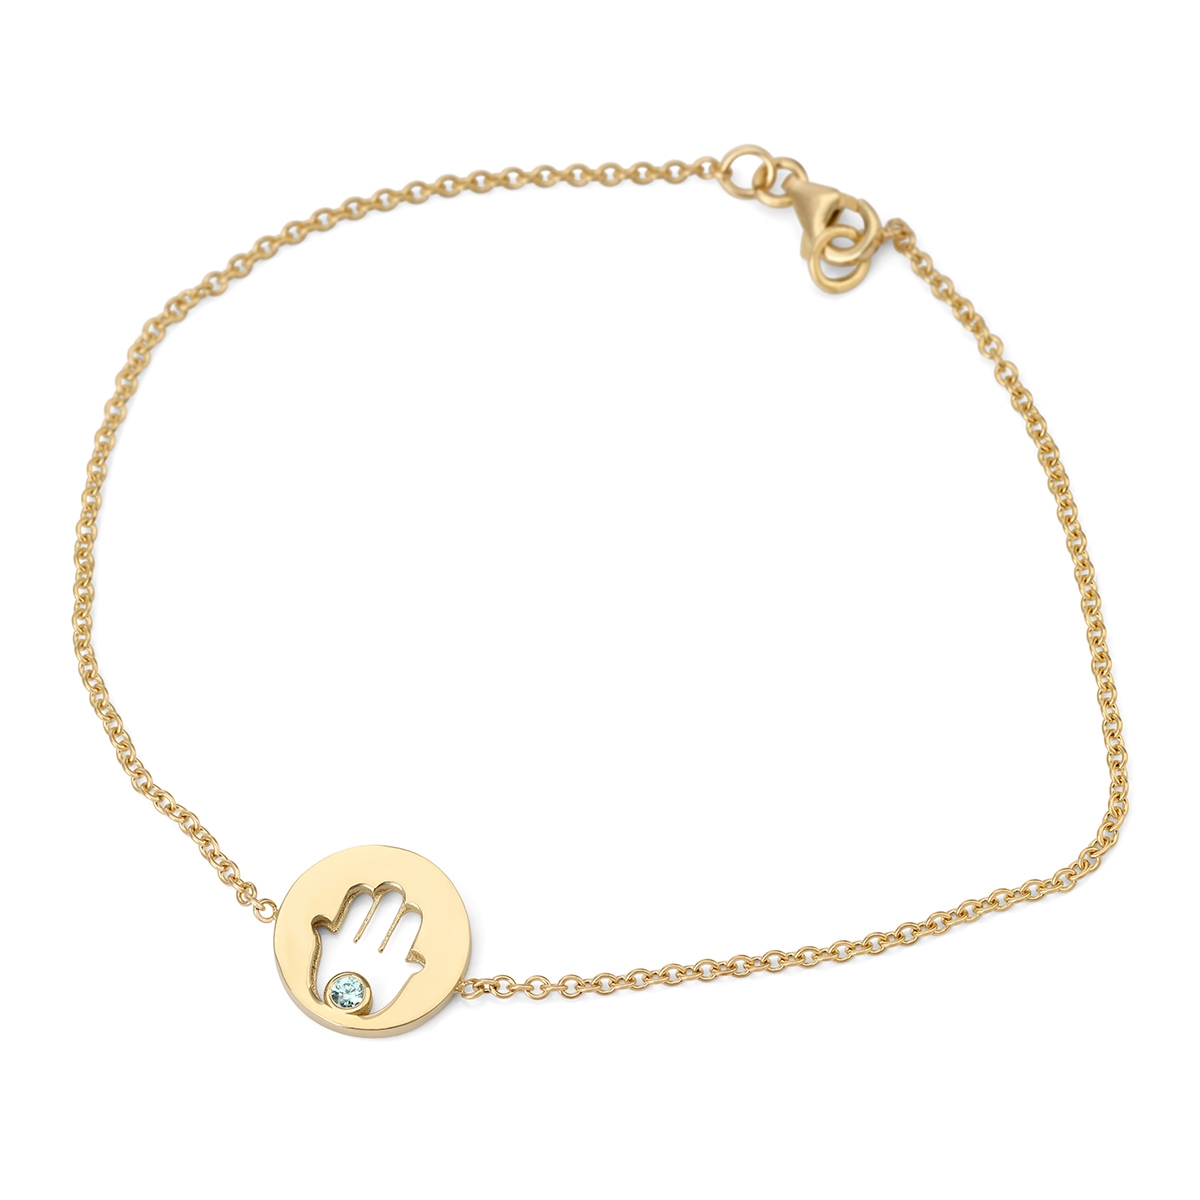 Luxury 14K Gold Topaz Hamsa Bracelet - 1